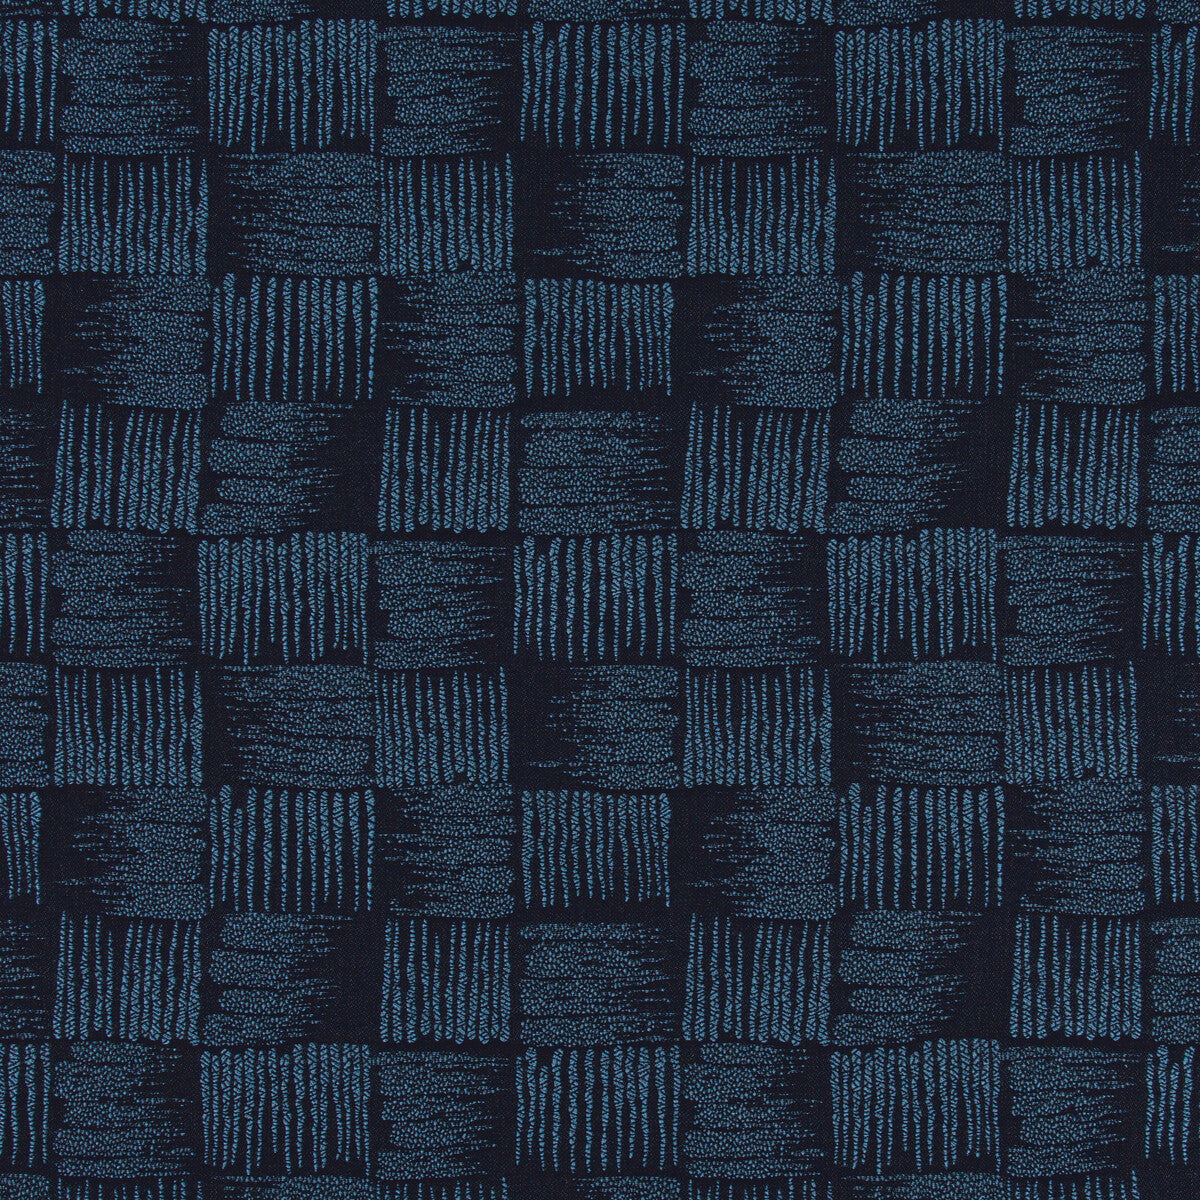 Lj Grw fabric - pattern 2019141.50.0 - by Lee Jofa Modern in the Kw Terra Firma III Indoor Outdoor collection